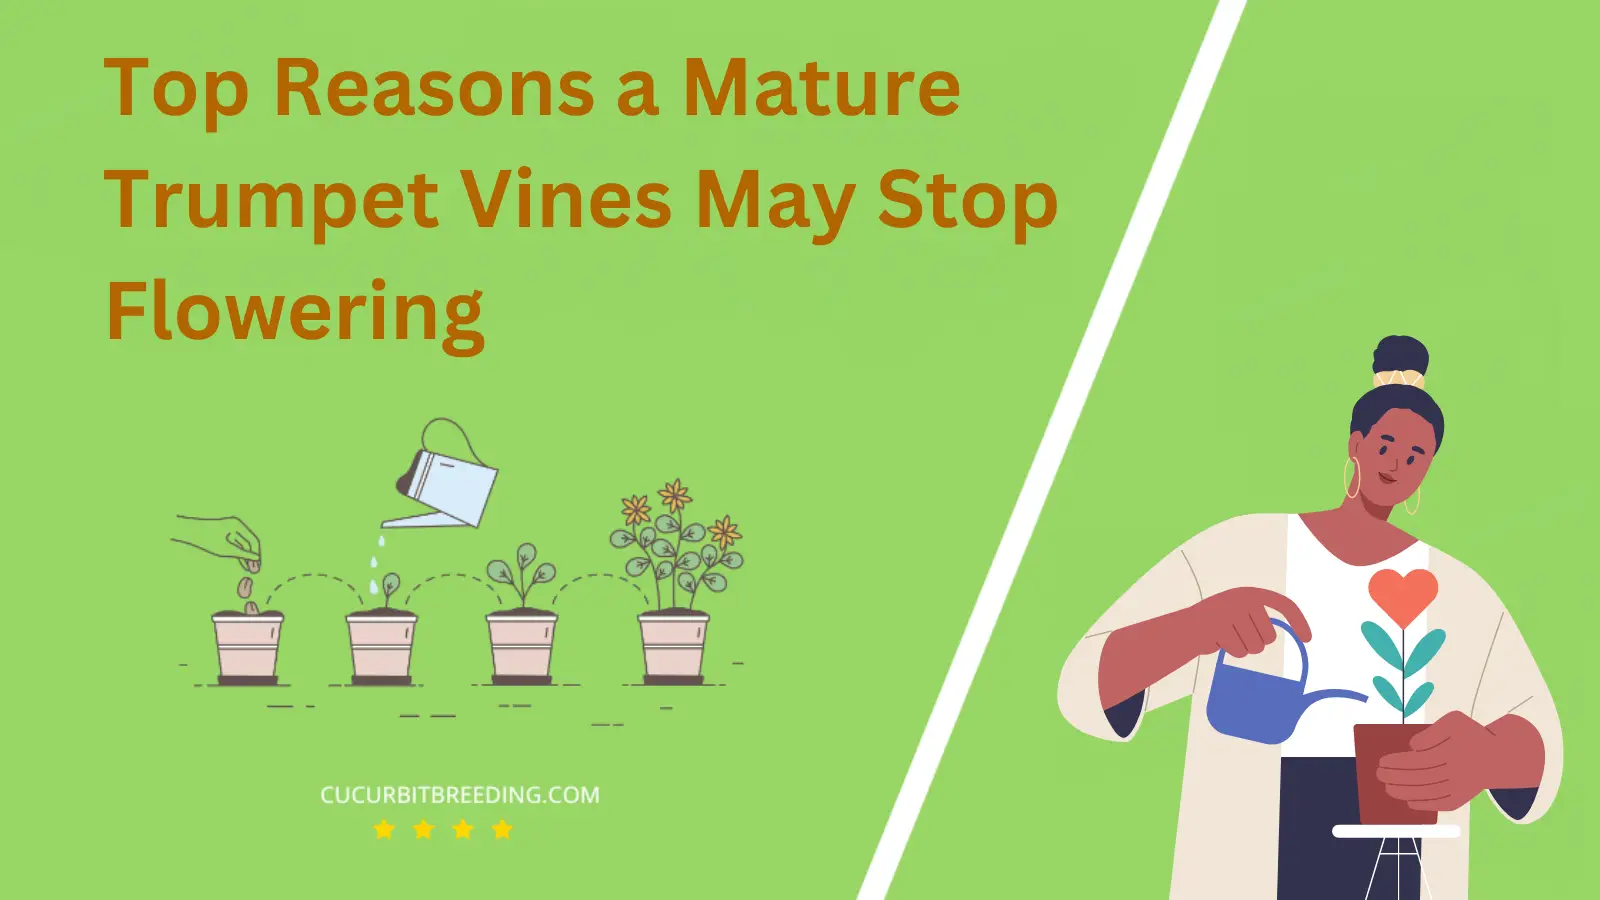 Top Reasons a Mature Trumpet Vines May Stop Flowering